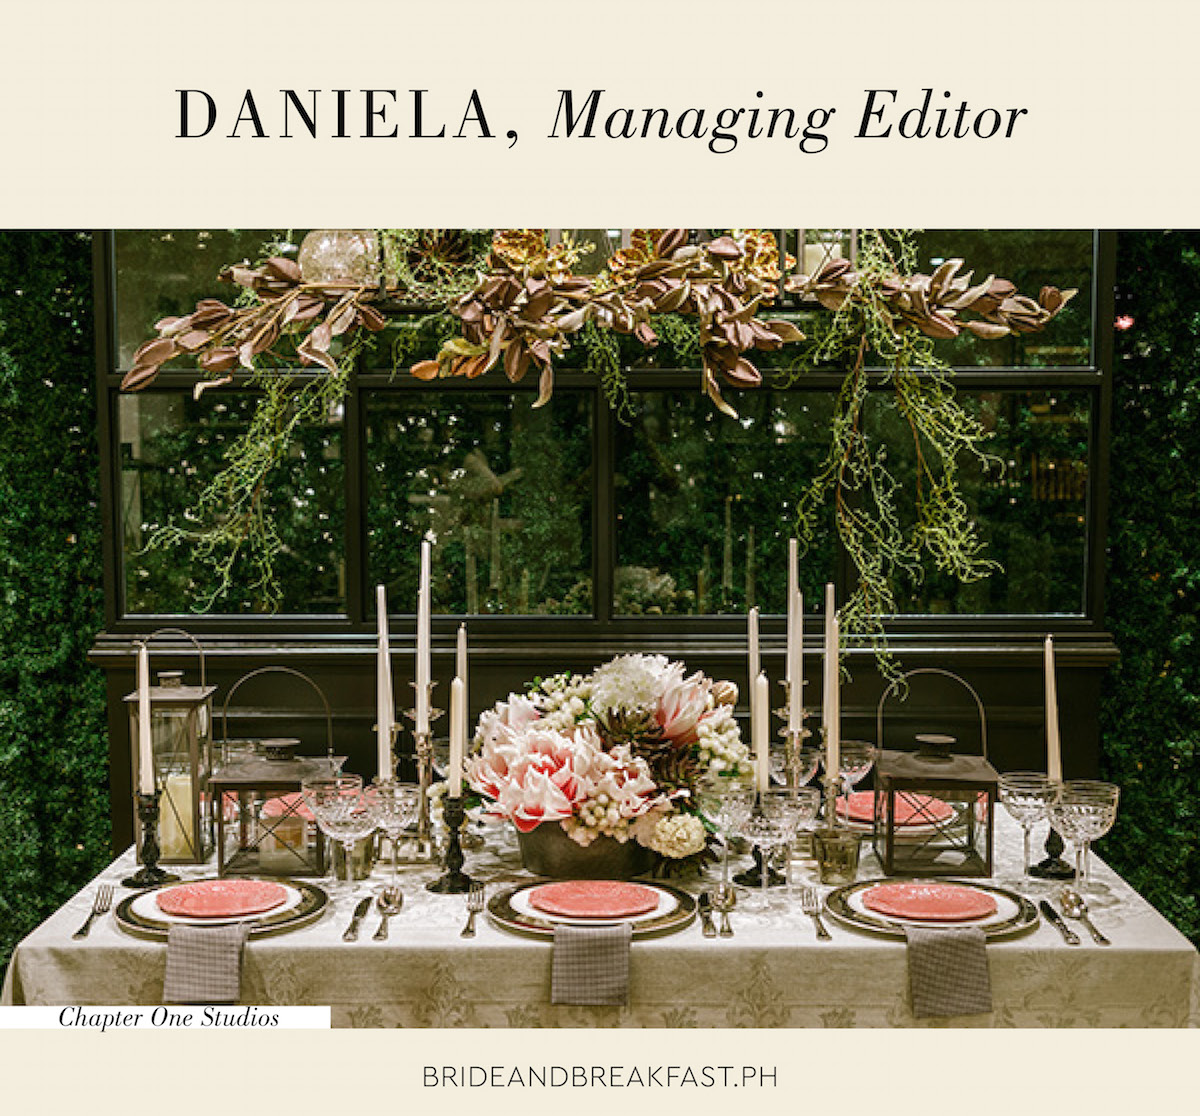 Daniela, Managing Editor Photo: Chapter One Studios